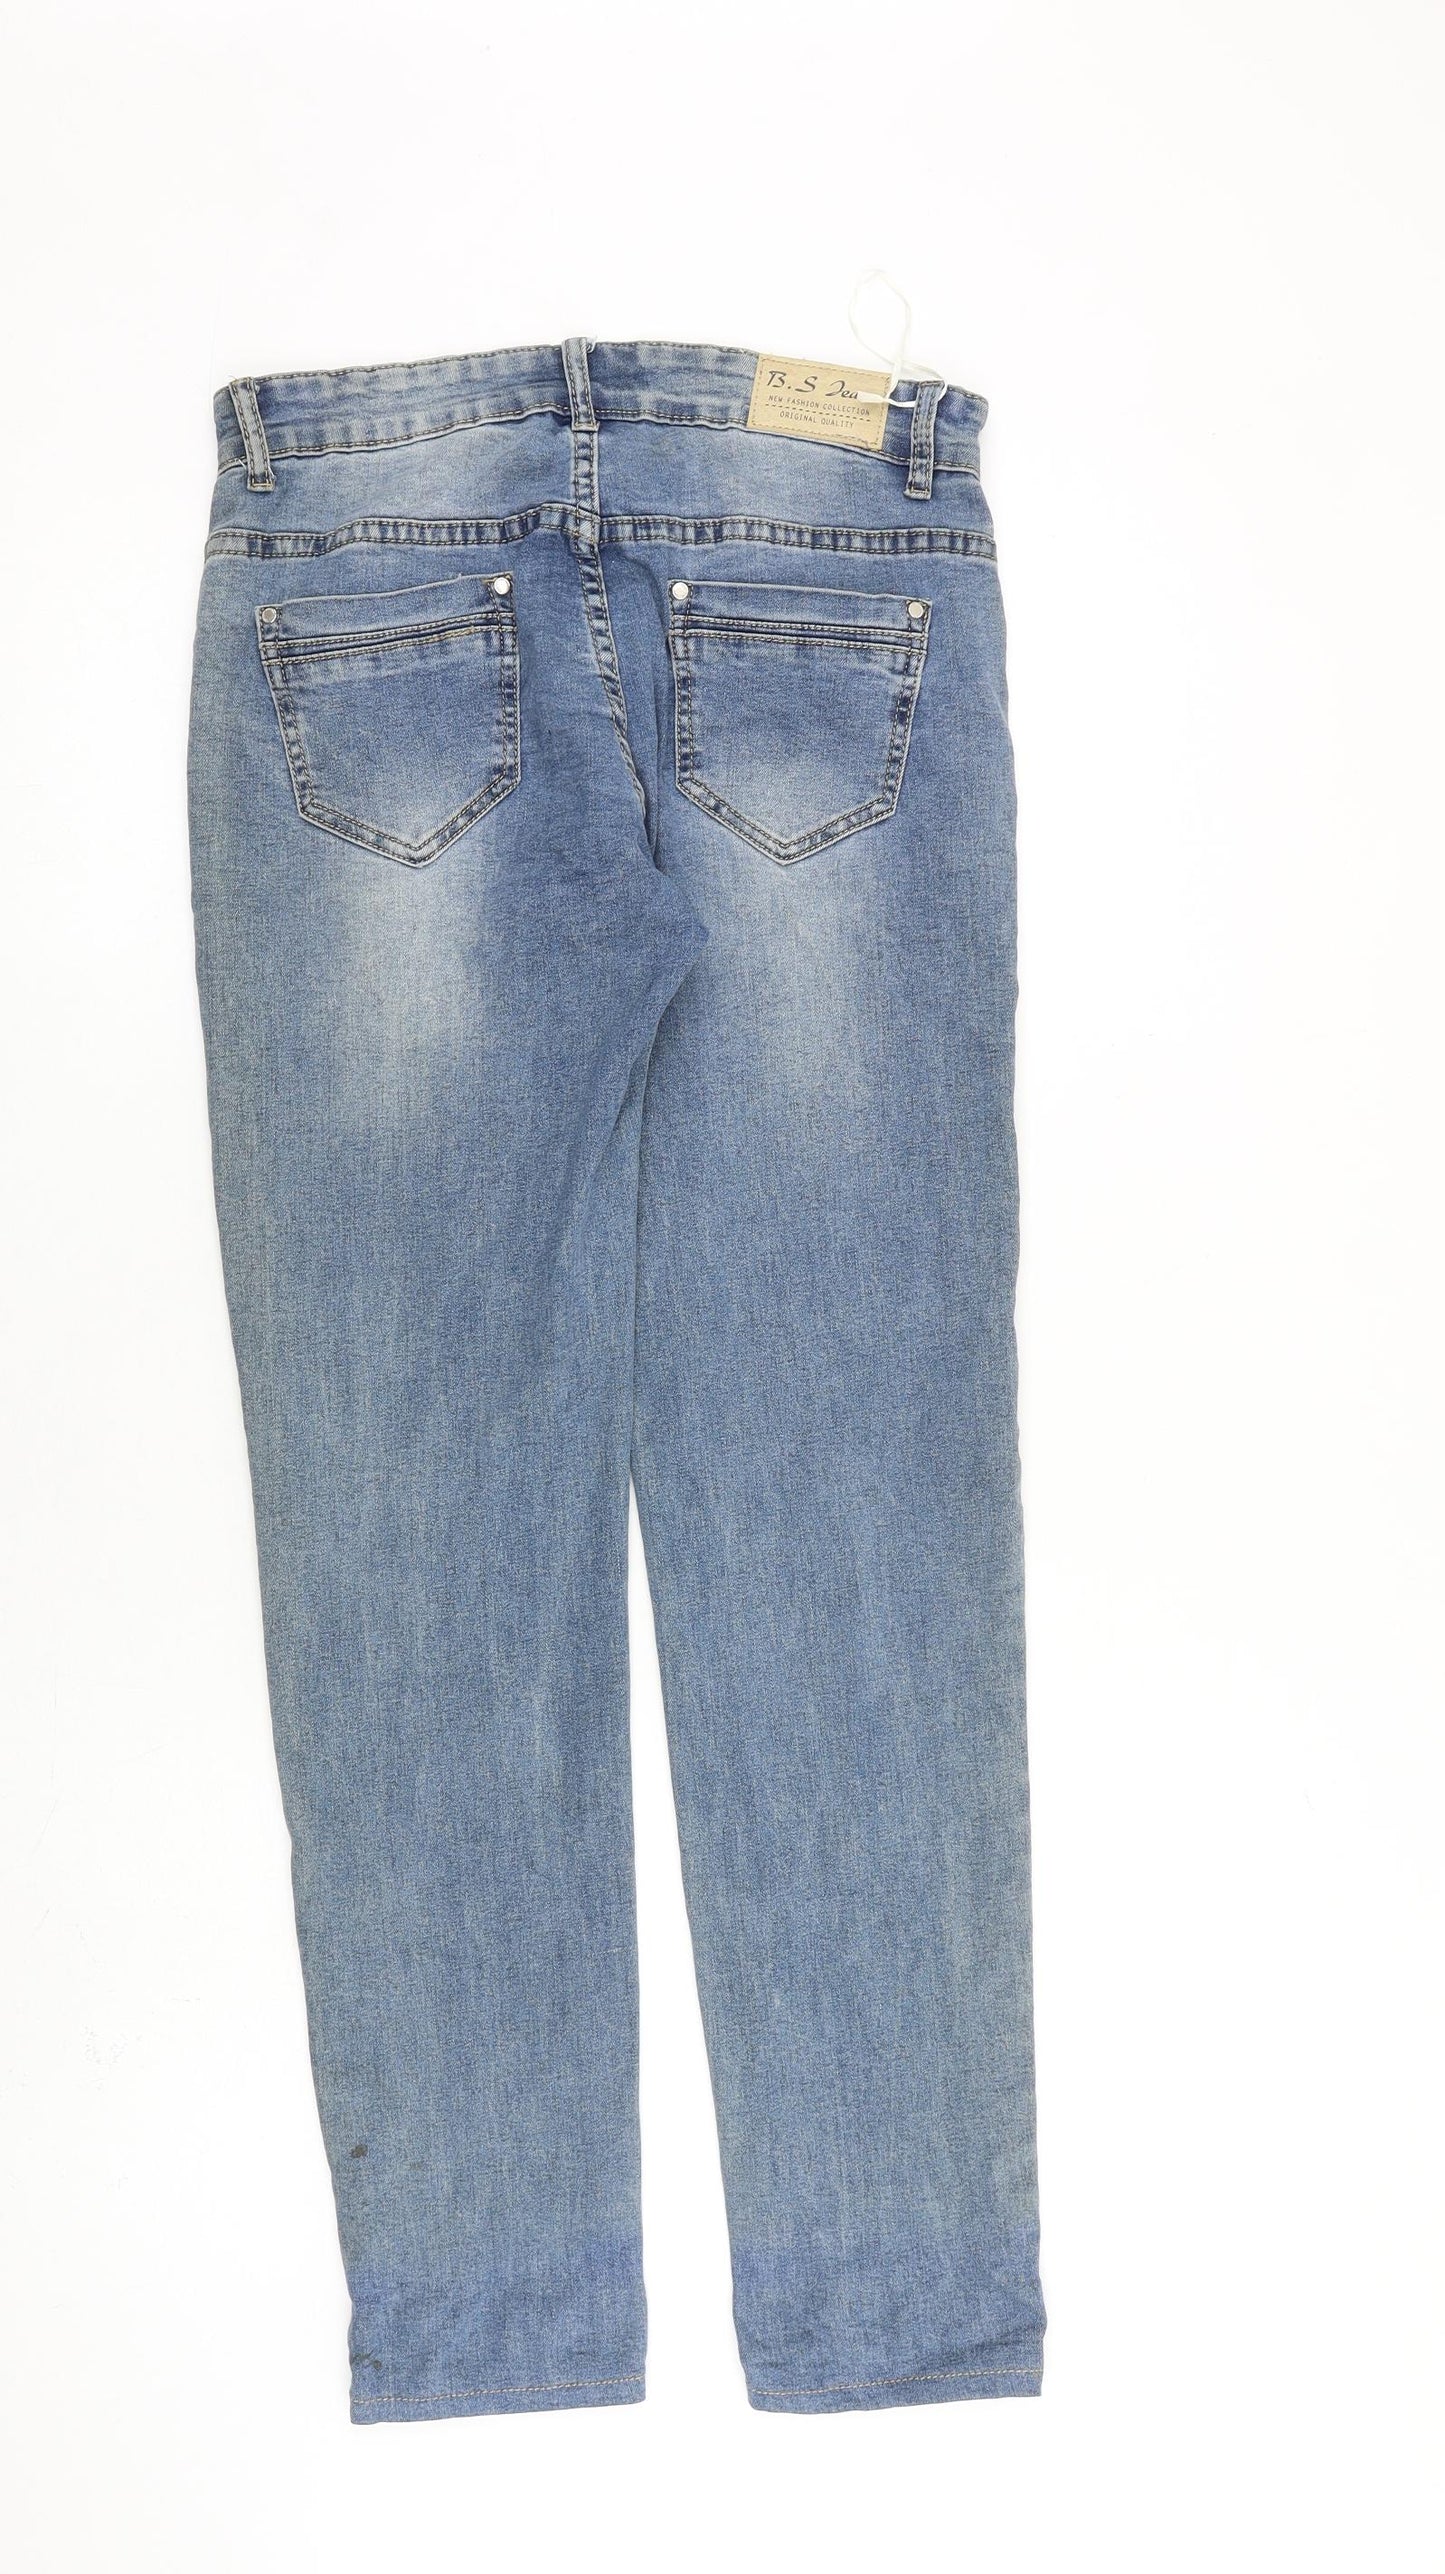 BS jeans Womens Blue Cotton Skinny Jeans Size 8 L31 in Regular Zip